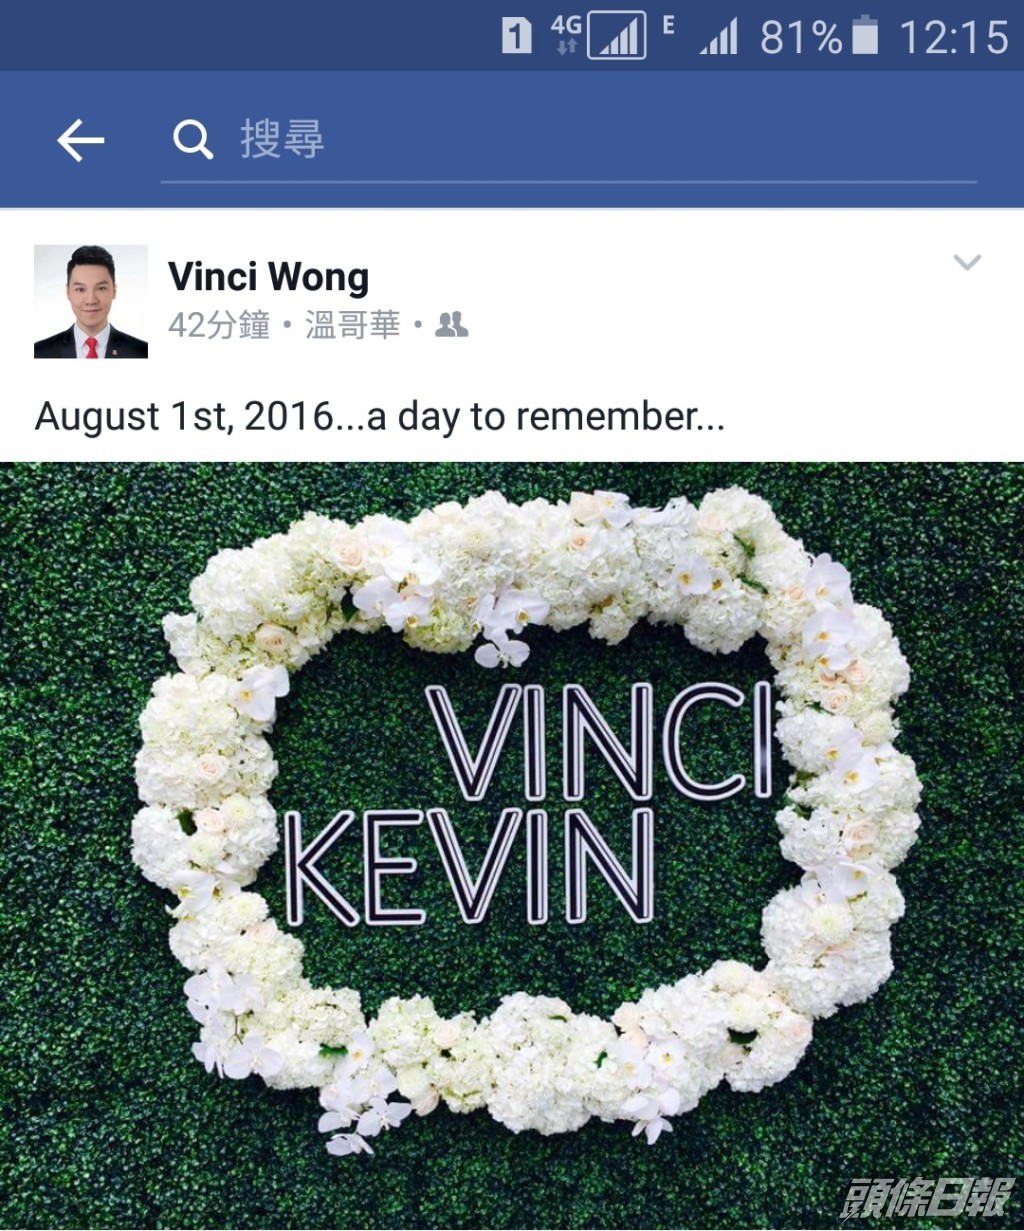 Vinci 和Kevin是香港娛樂圈首宗公開的同性婚姻。